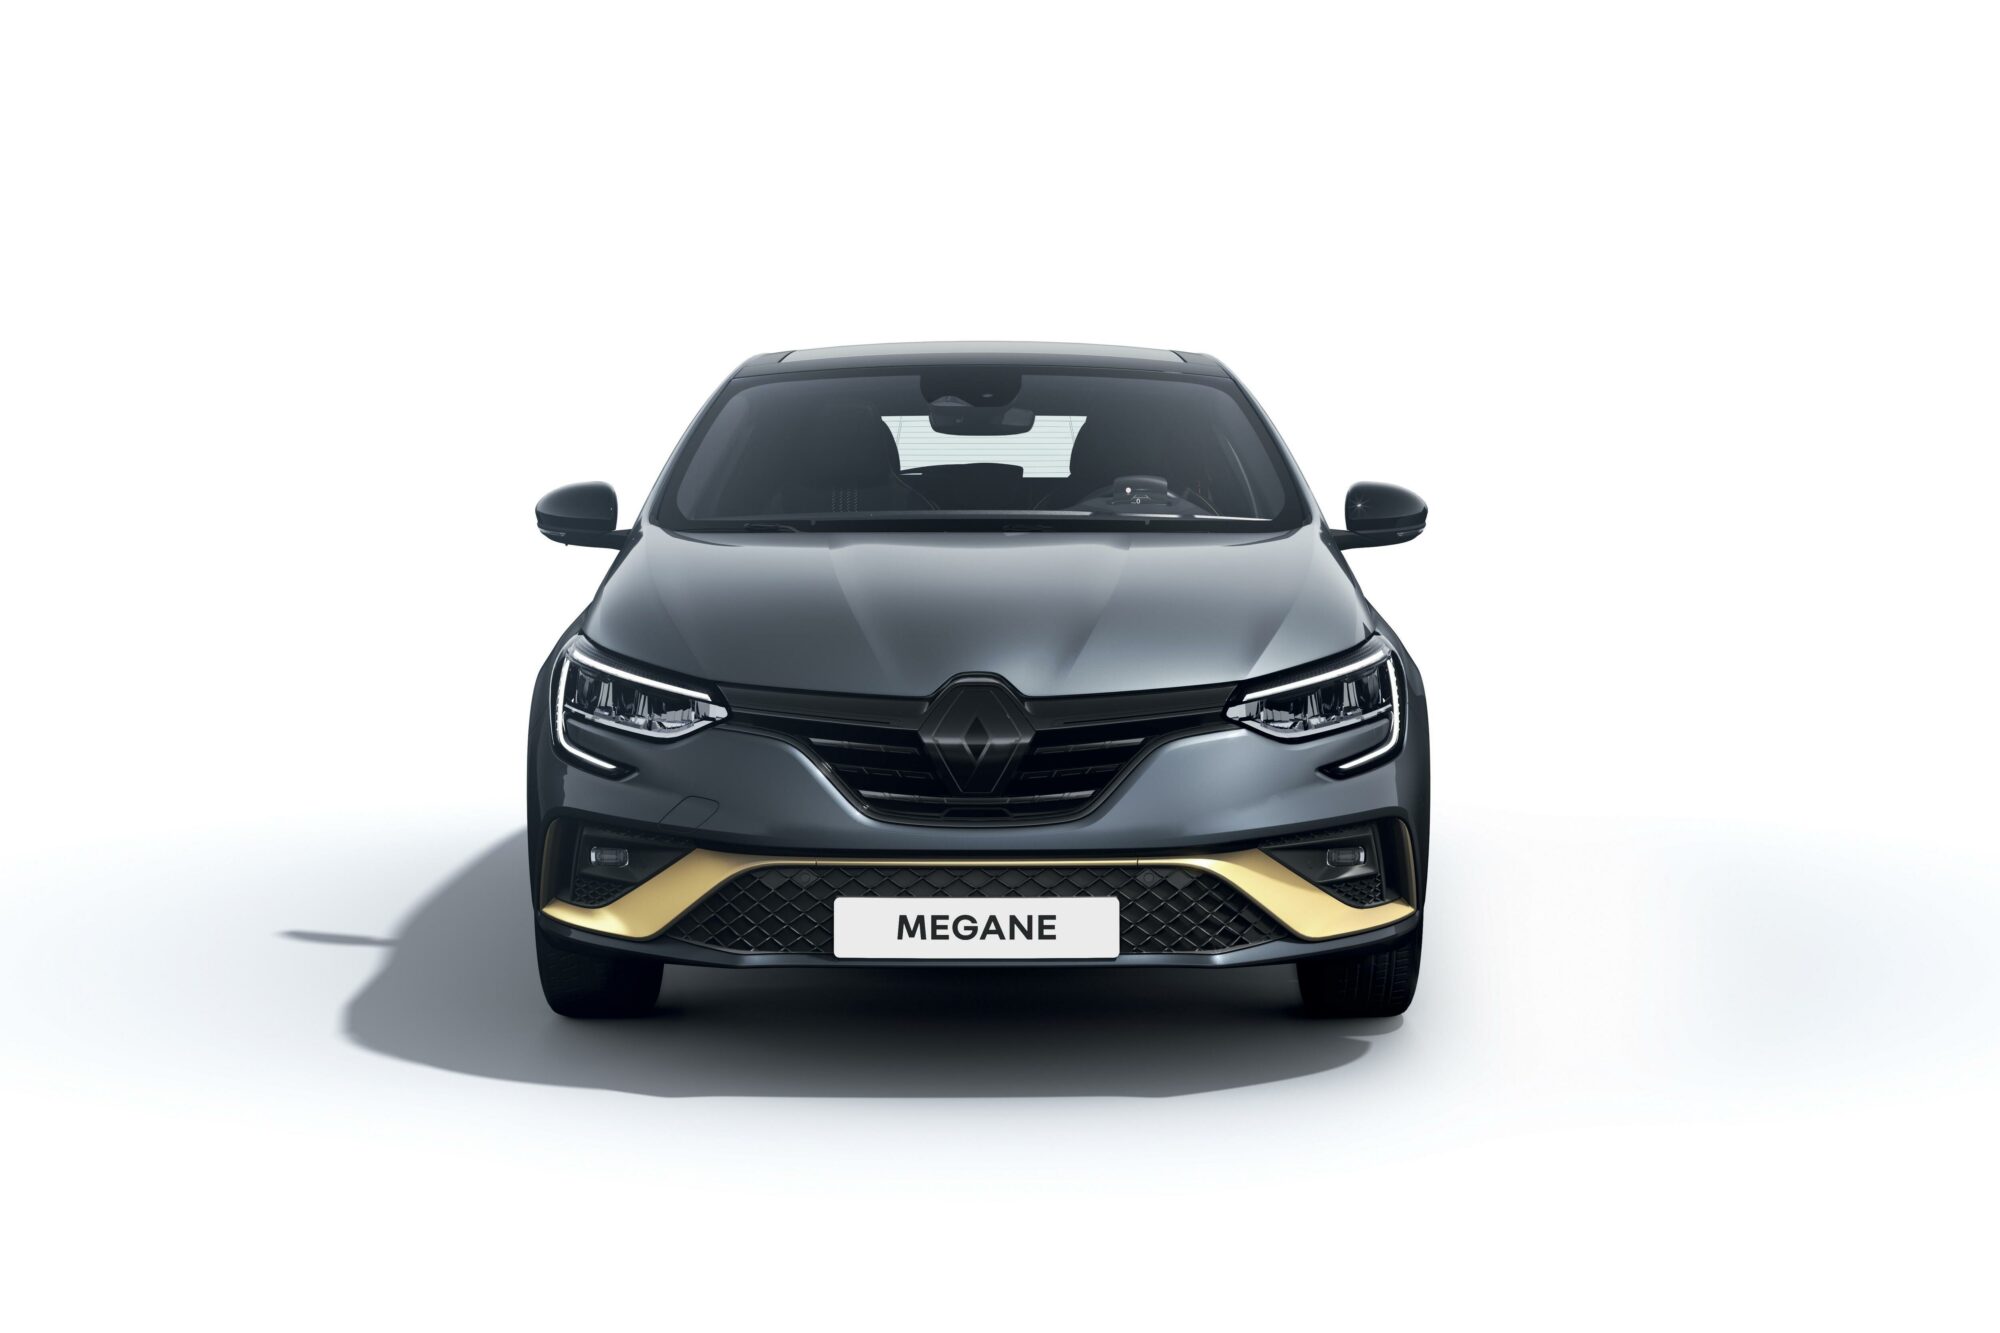 2022 - Renault MEGANE BERLINE E-Tech engineered